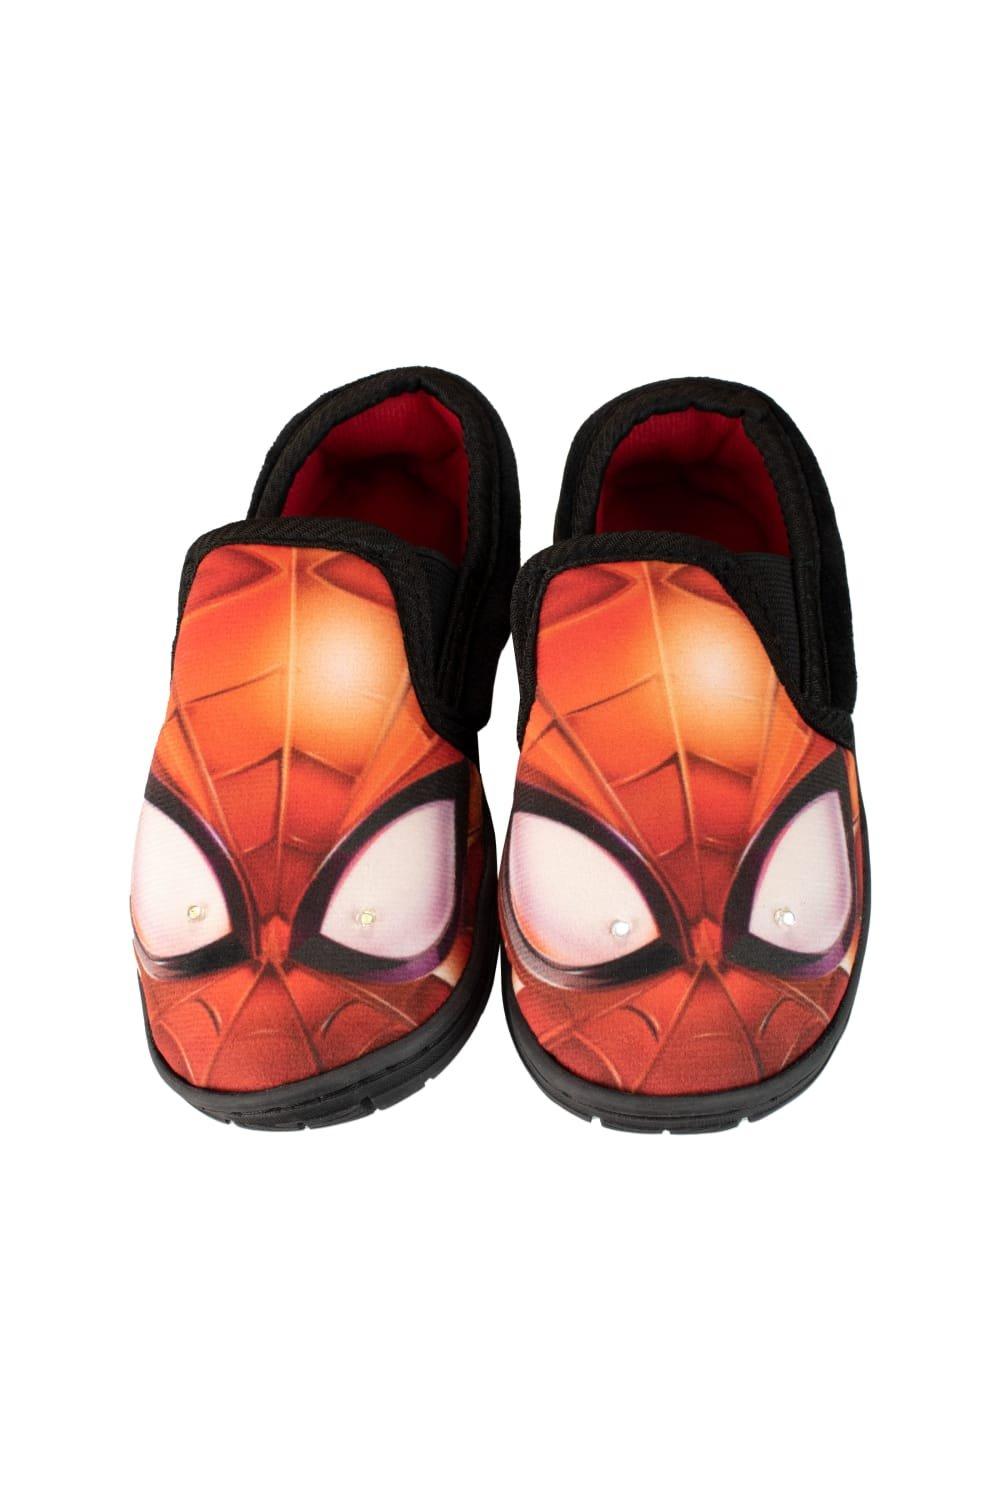 Spiderman Slippers